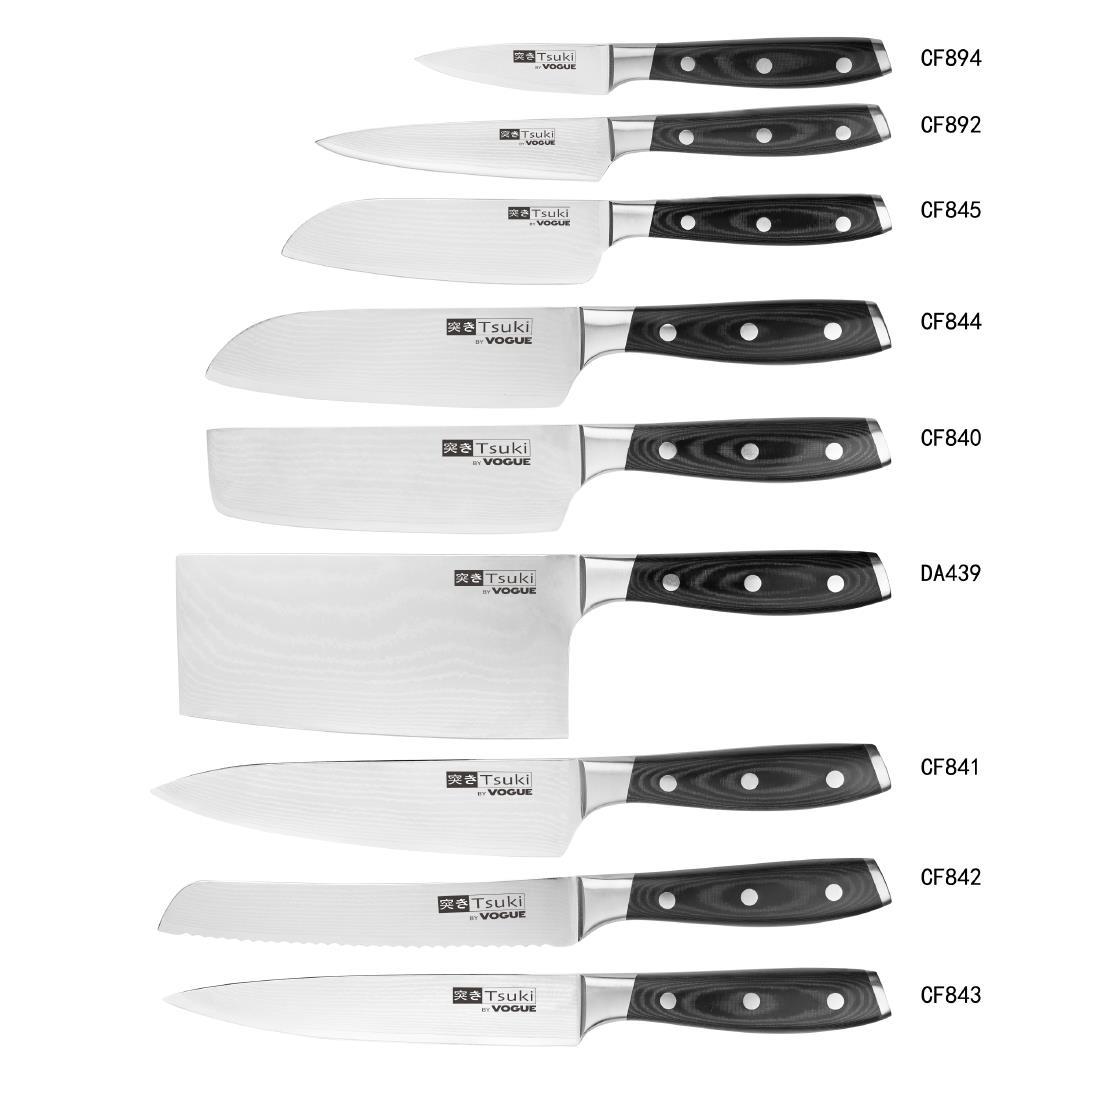 Vogue Tsuki Series 7 Utility Knife 12.5cm - CF892  - 5